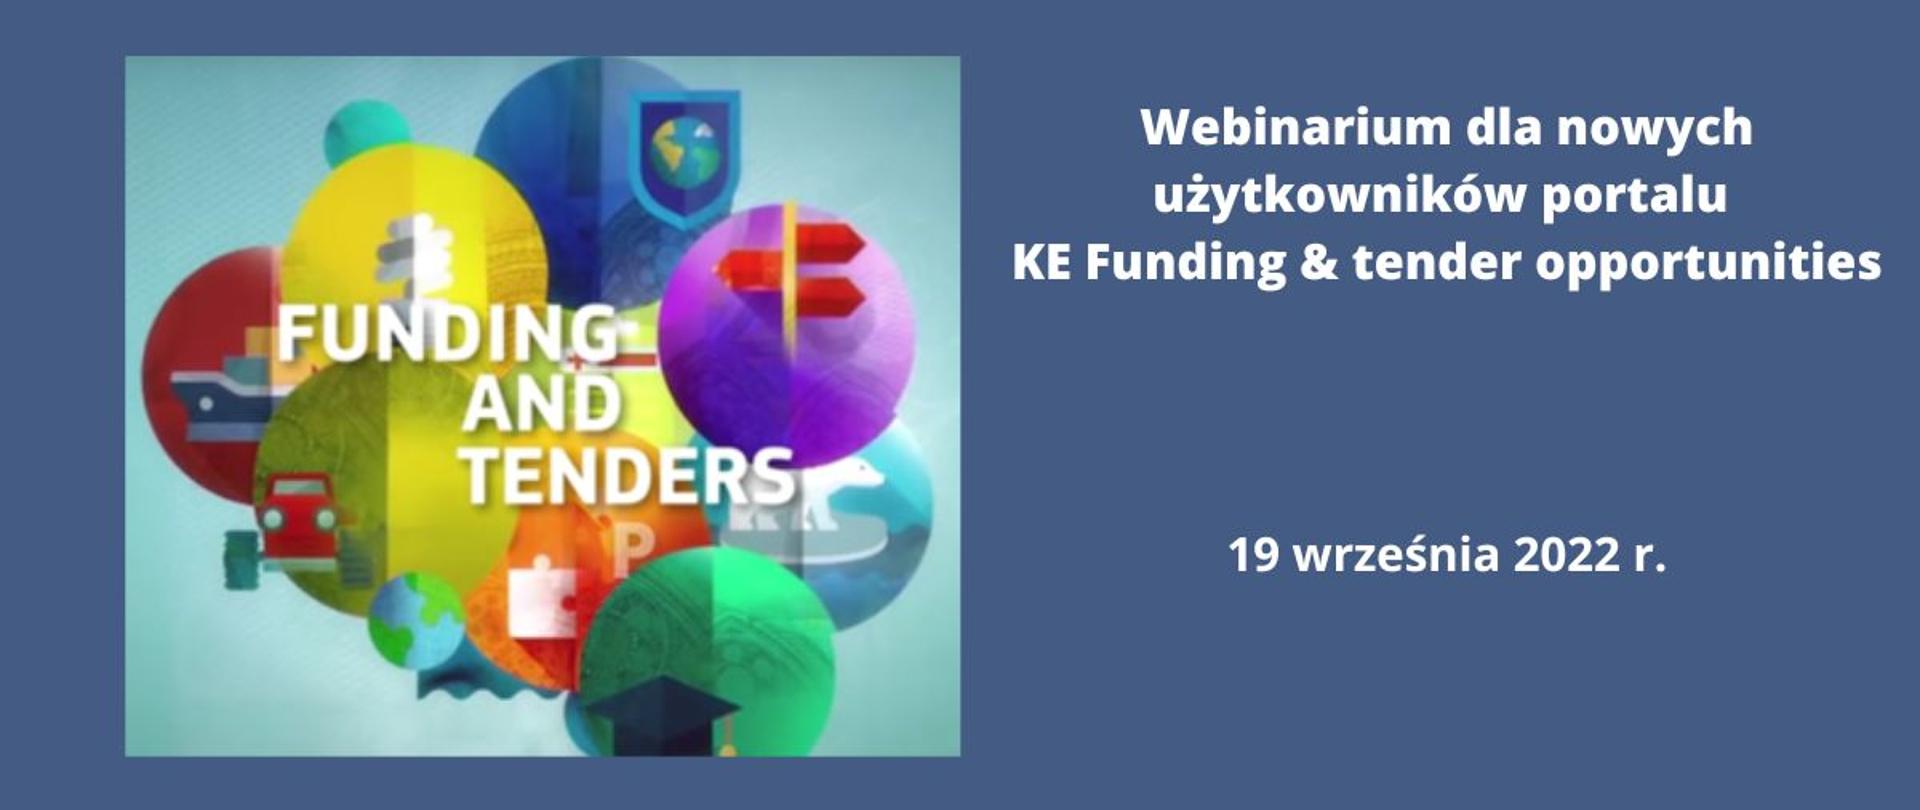 Webinarium dla nowych użytkowników portalu KE Funding & tender opportunities